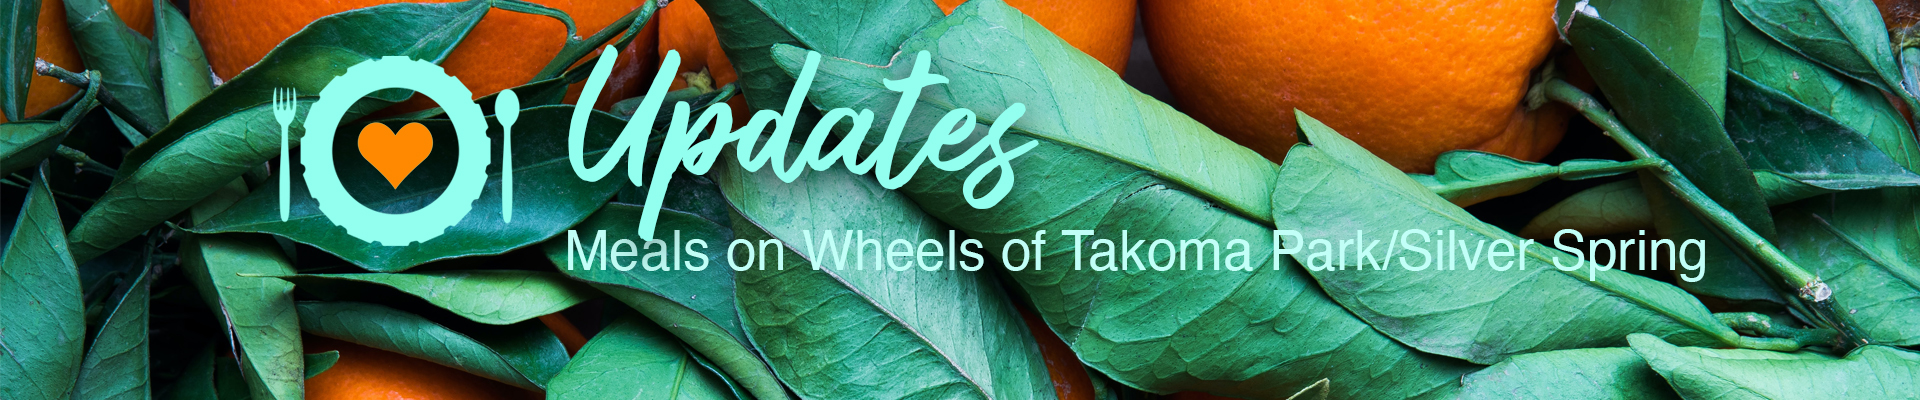 Meals on Wheels Takoma Park/Silver Spring